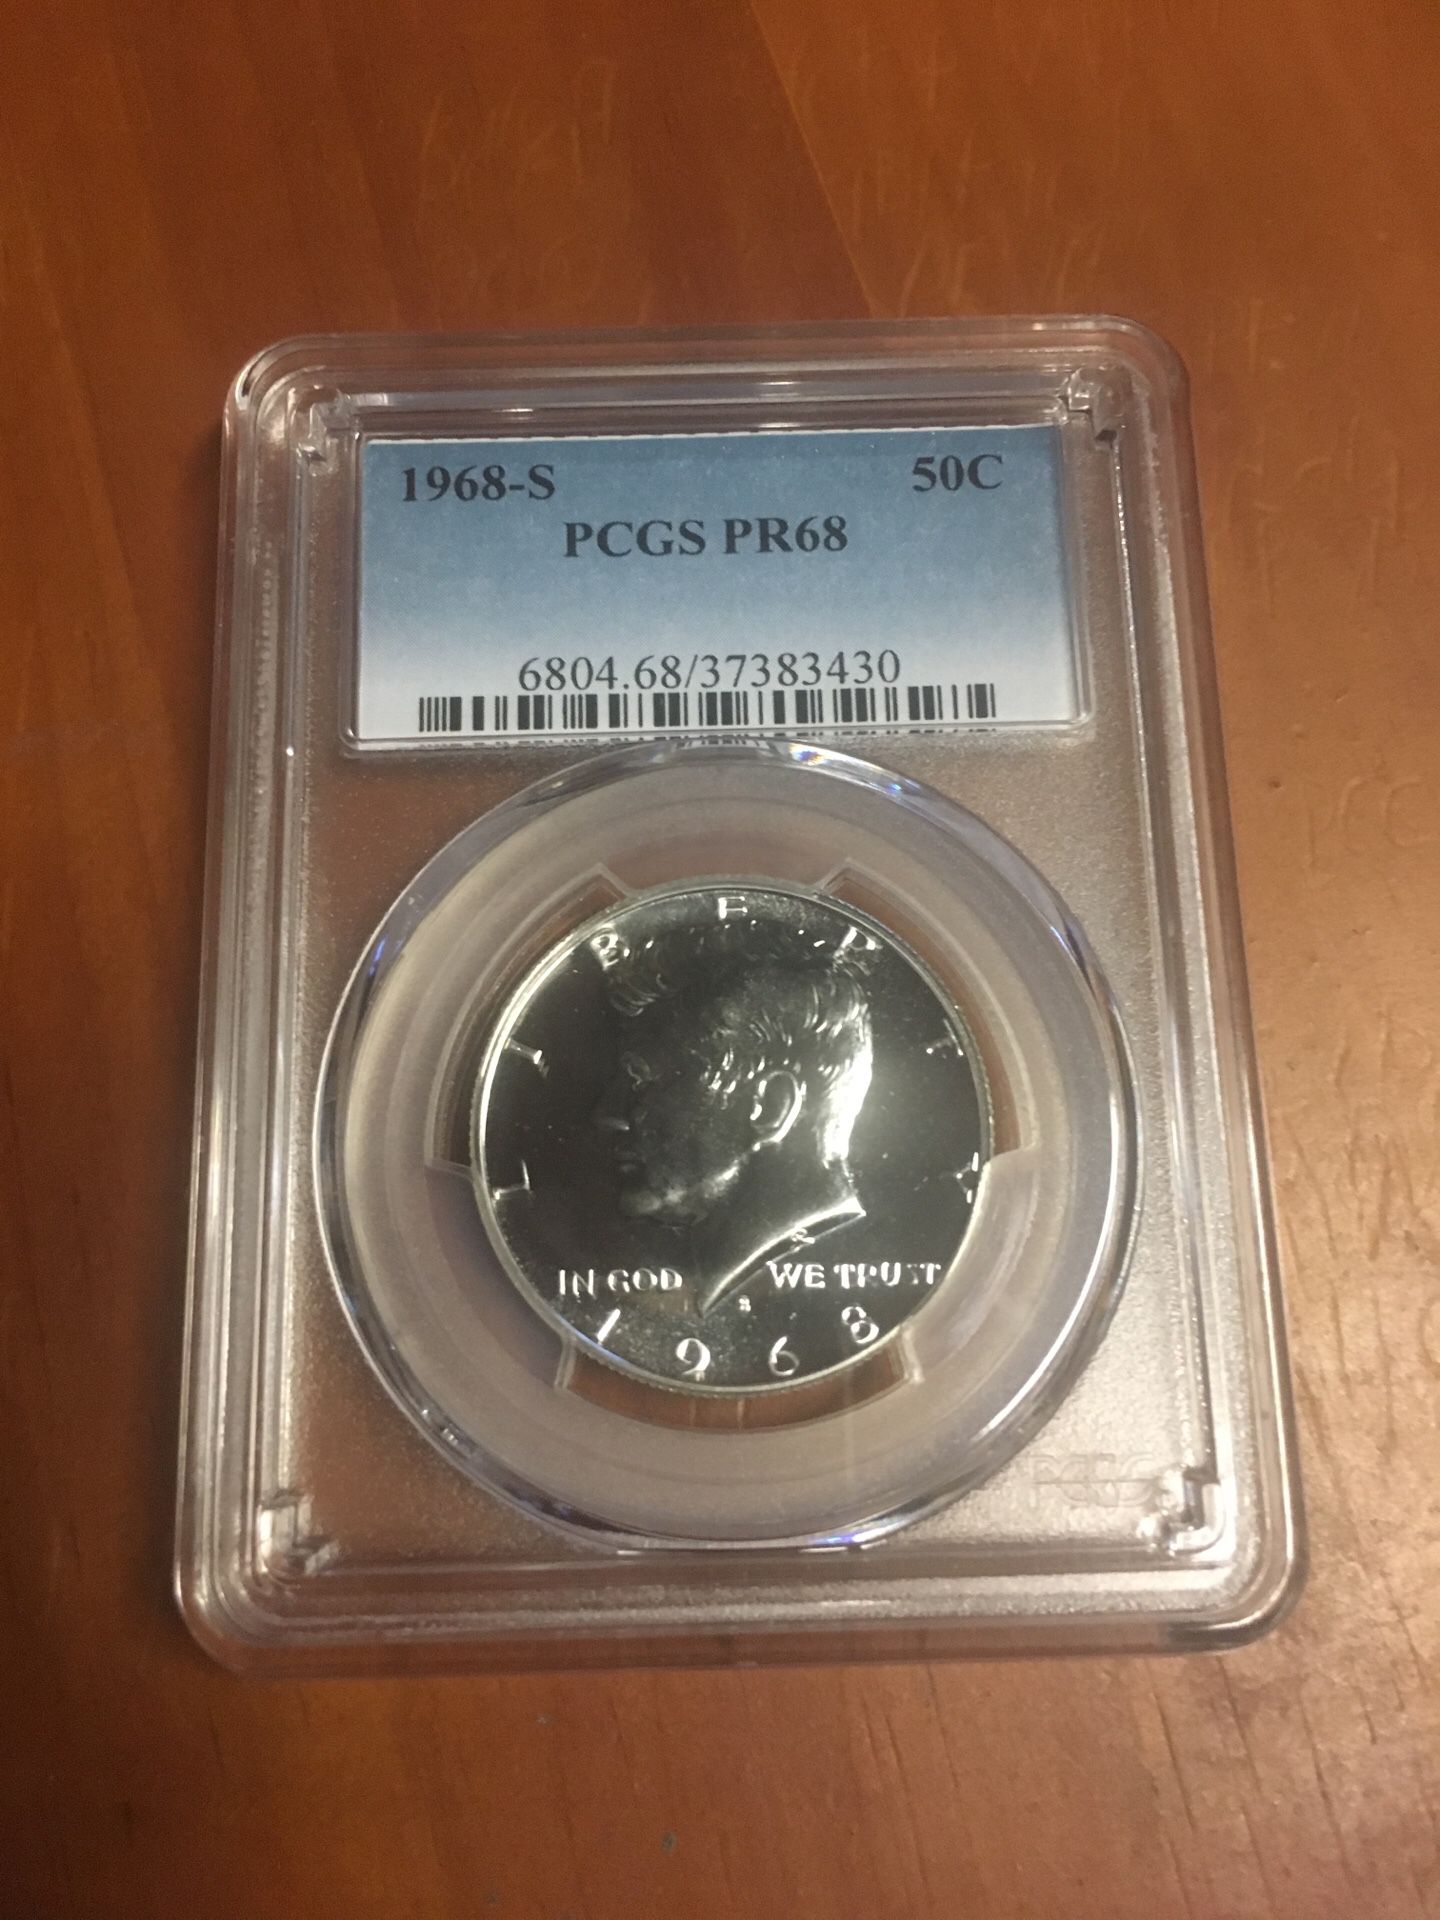 1968S PCGS PROOF68 50 cent piece!